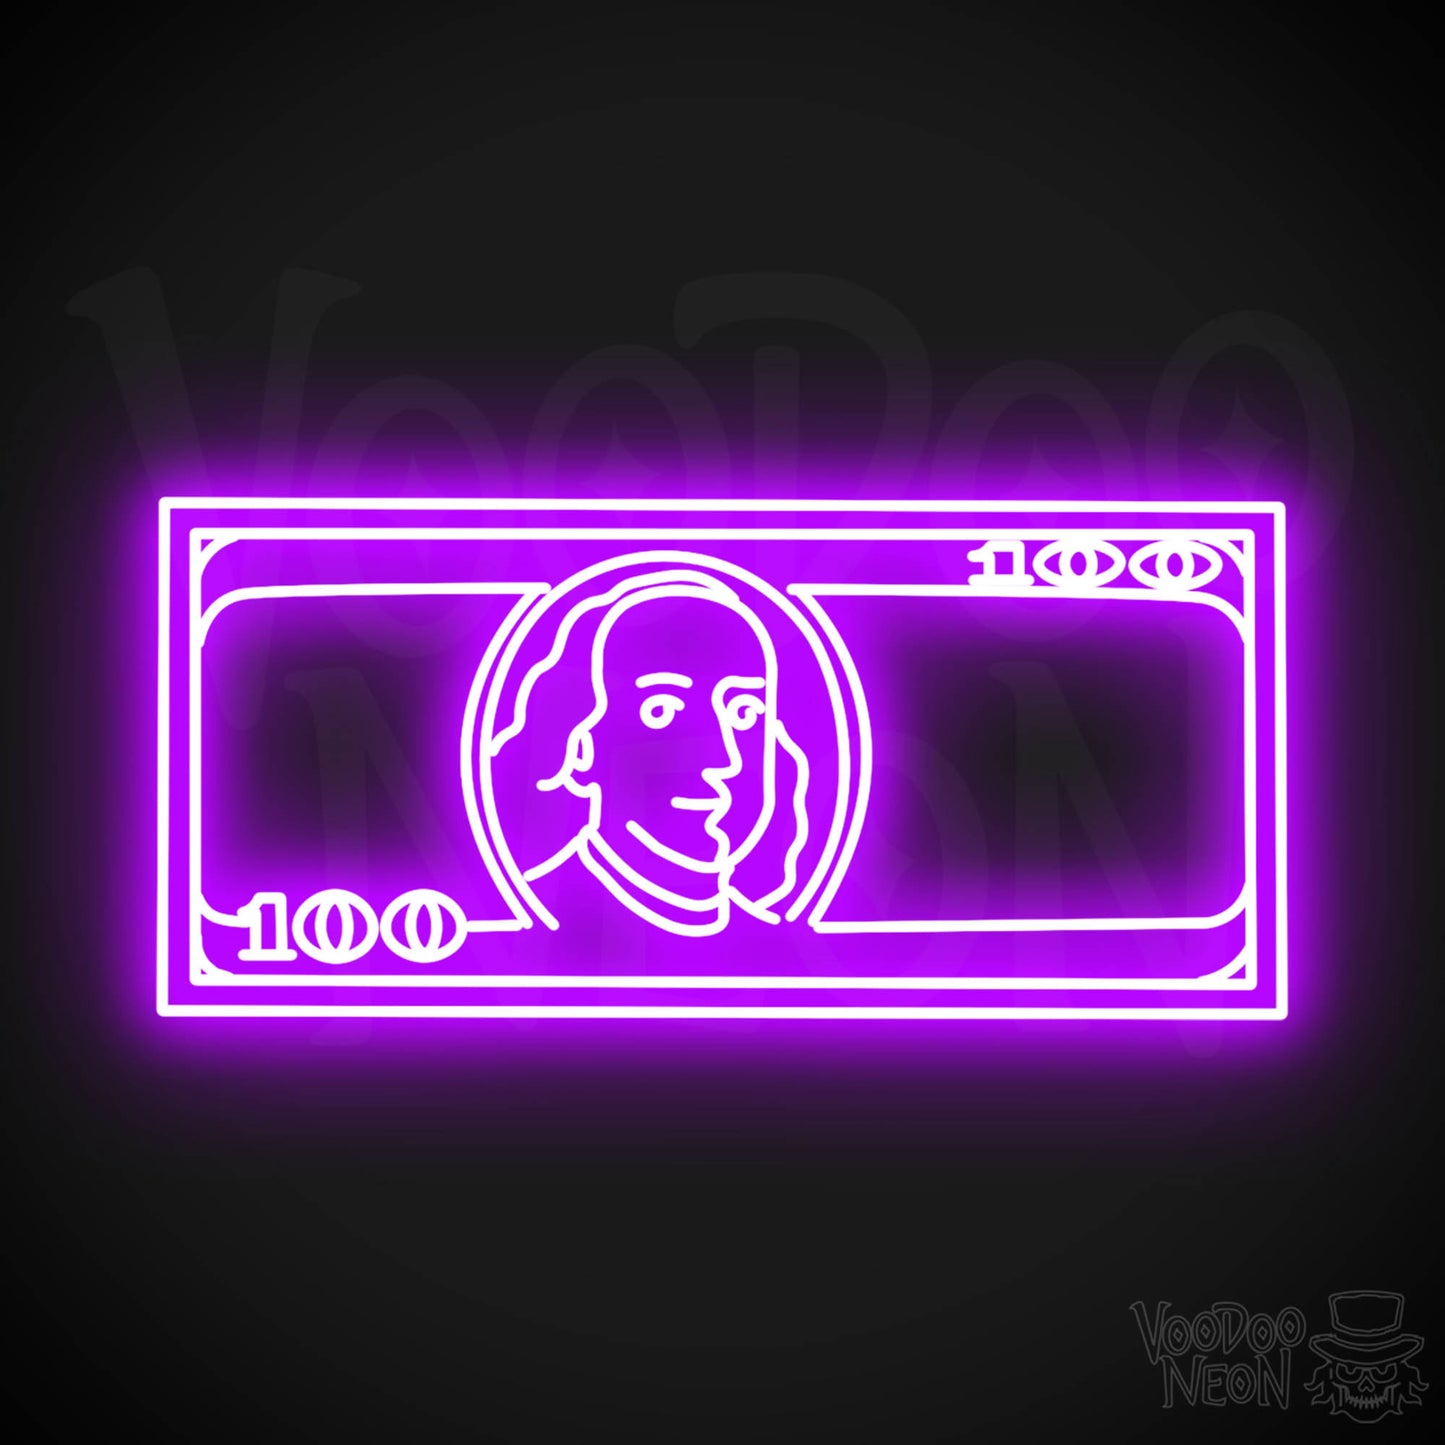 US $100 Bill Neon Sign - Neon $100 Sign - Color Purple